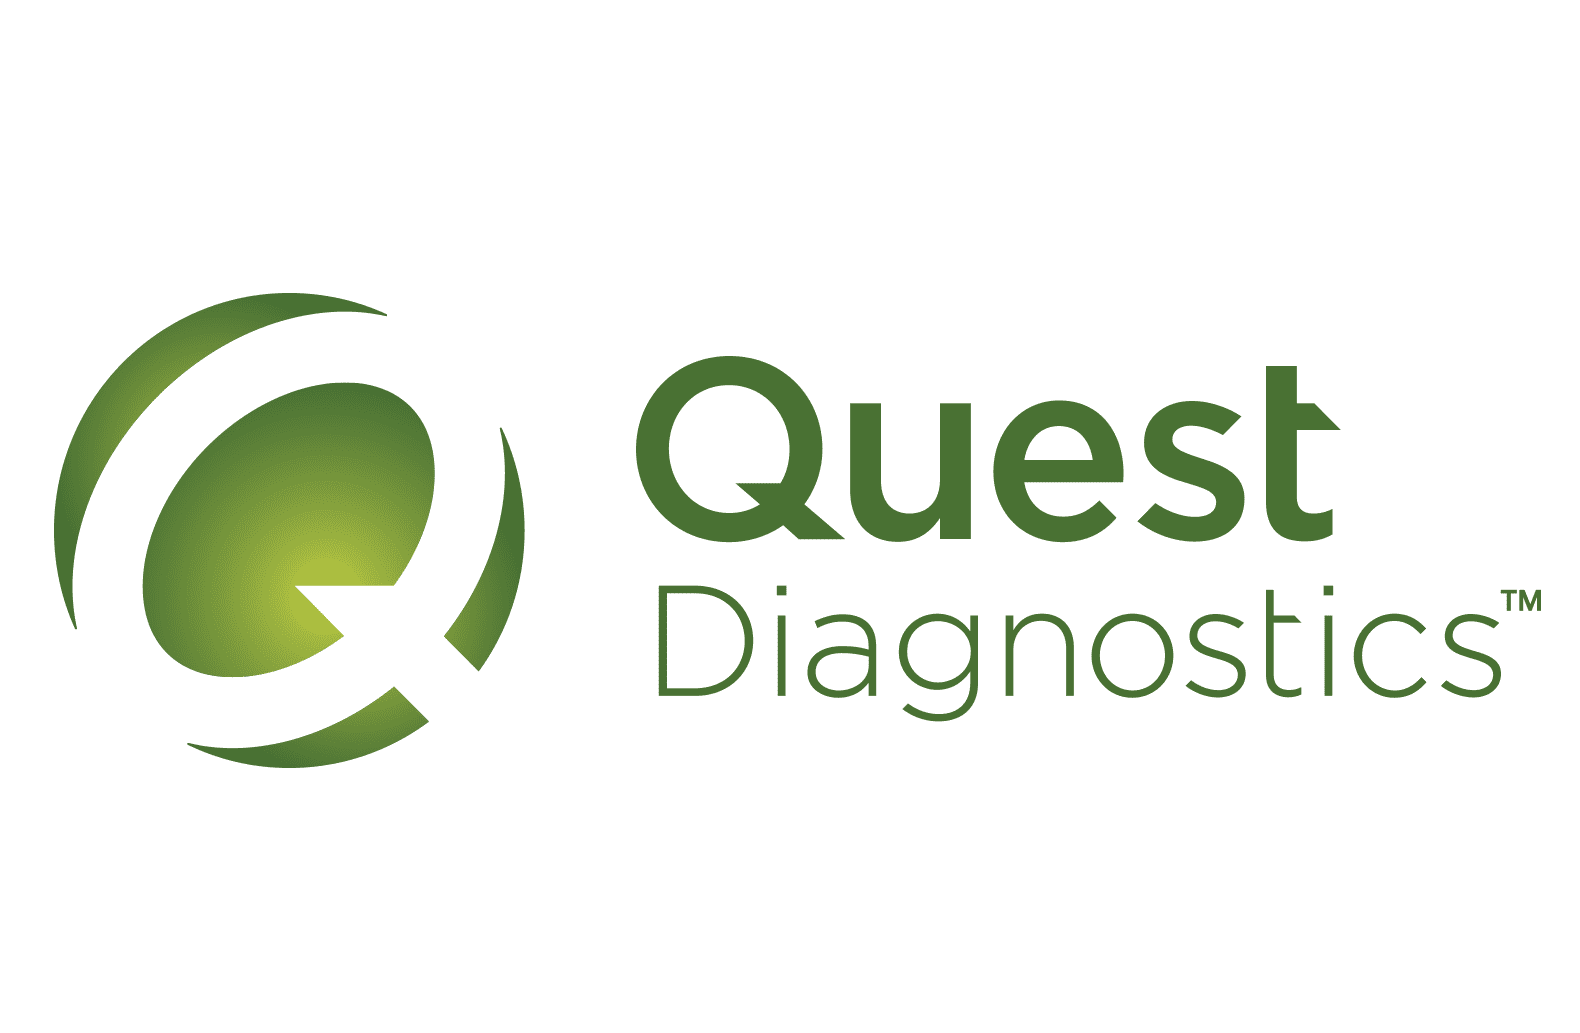 quest diagnostics locations make appointment